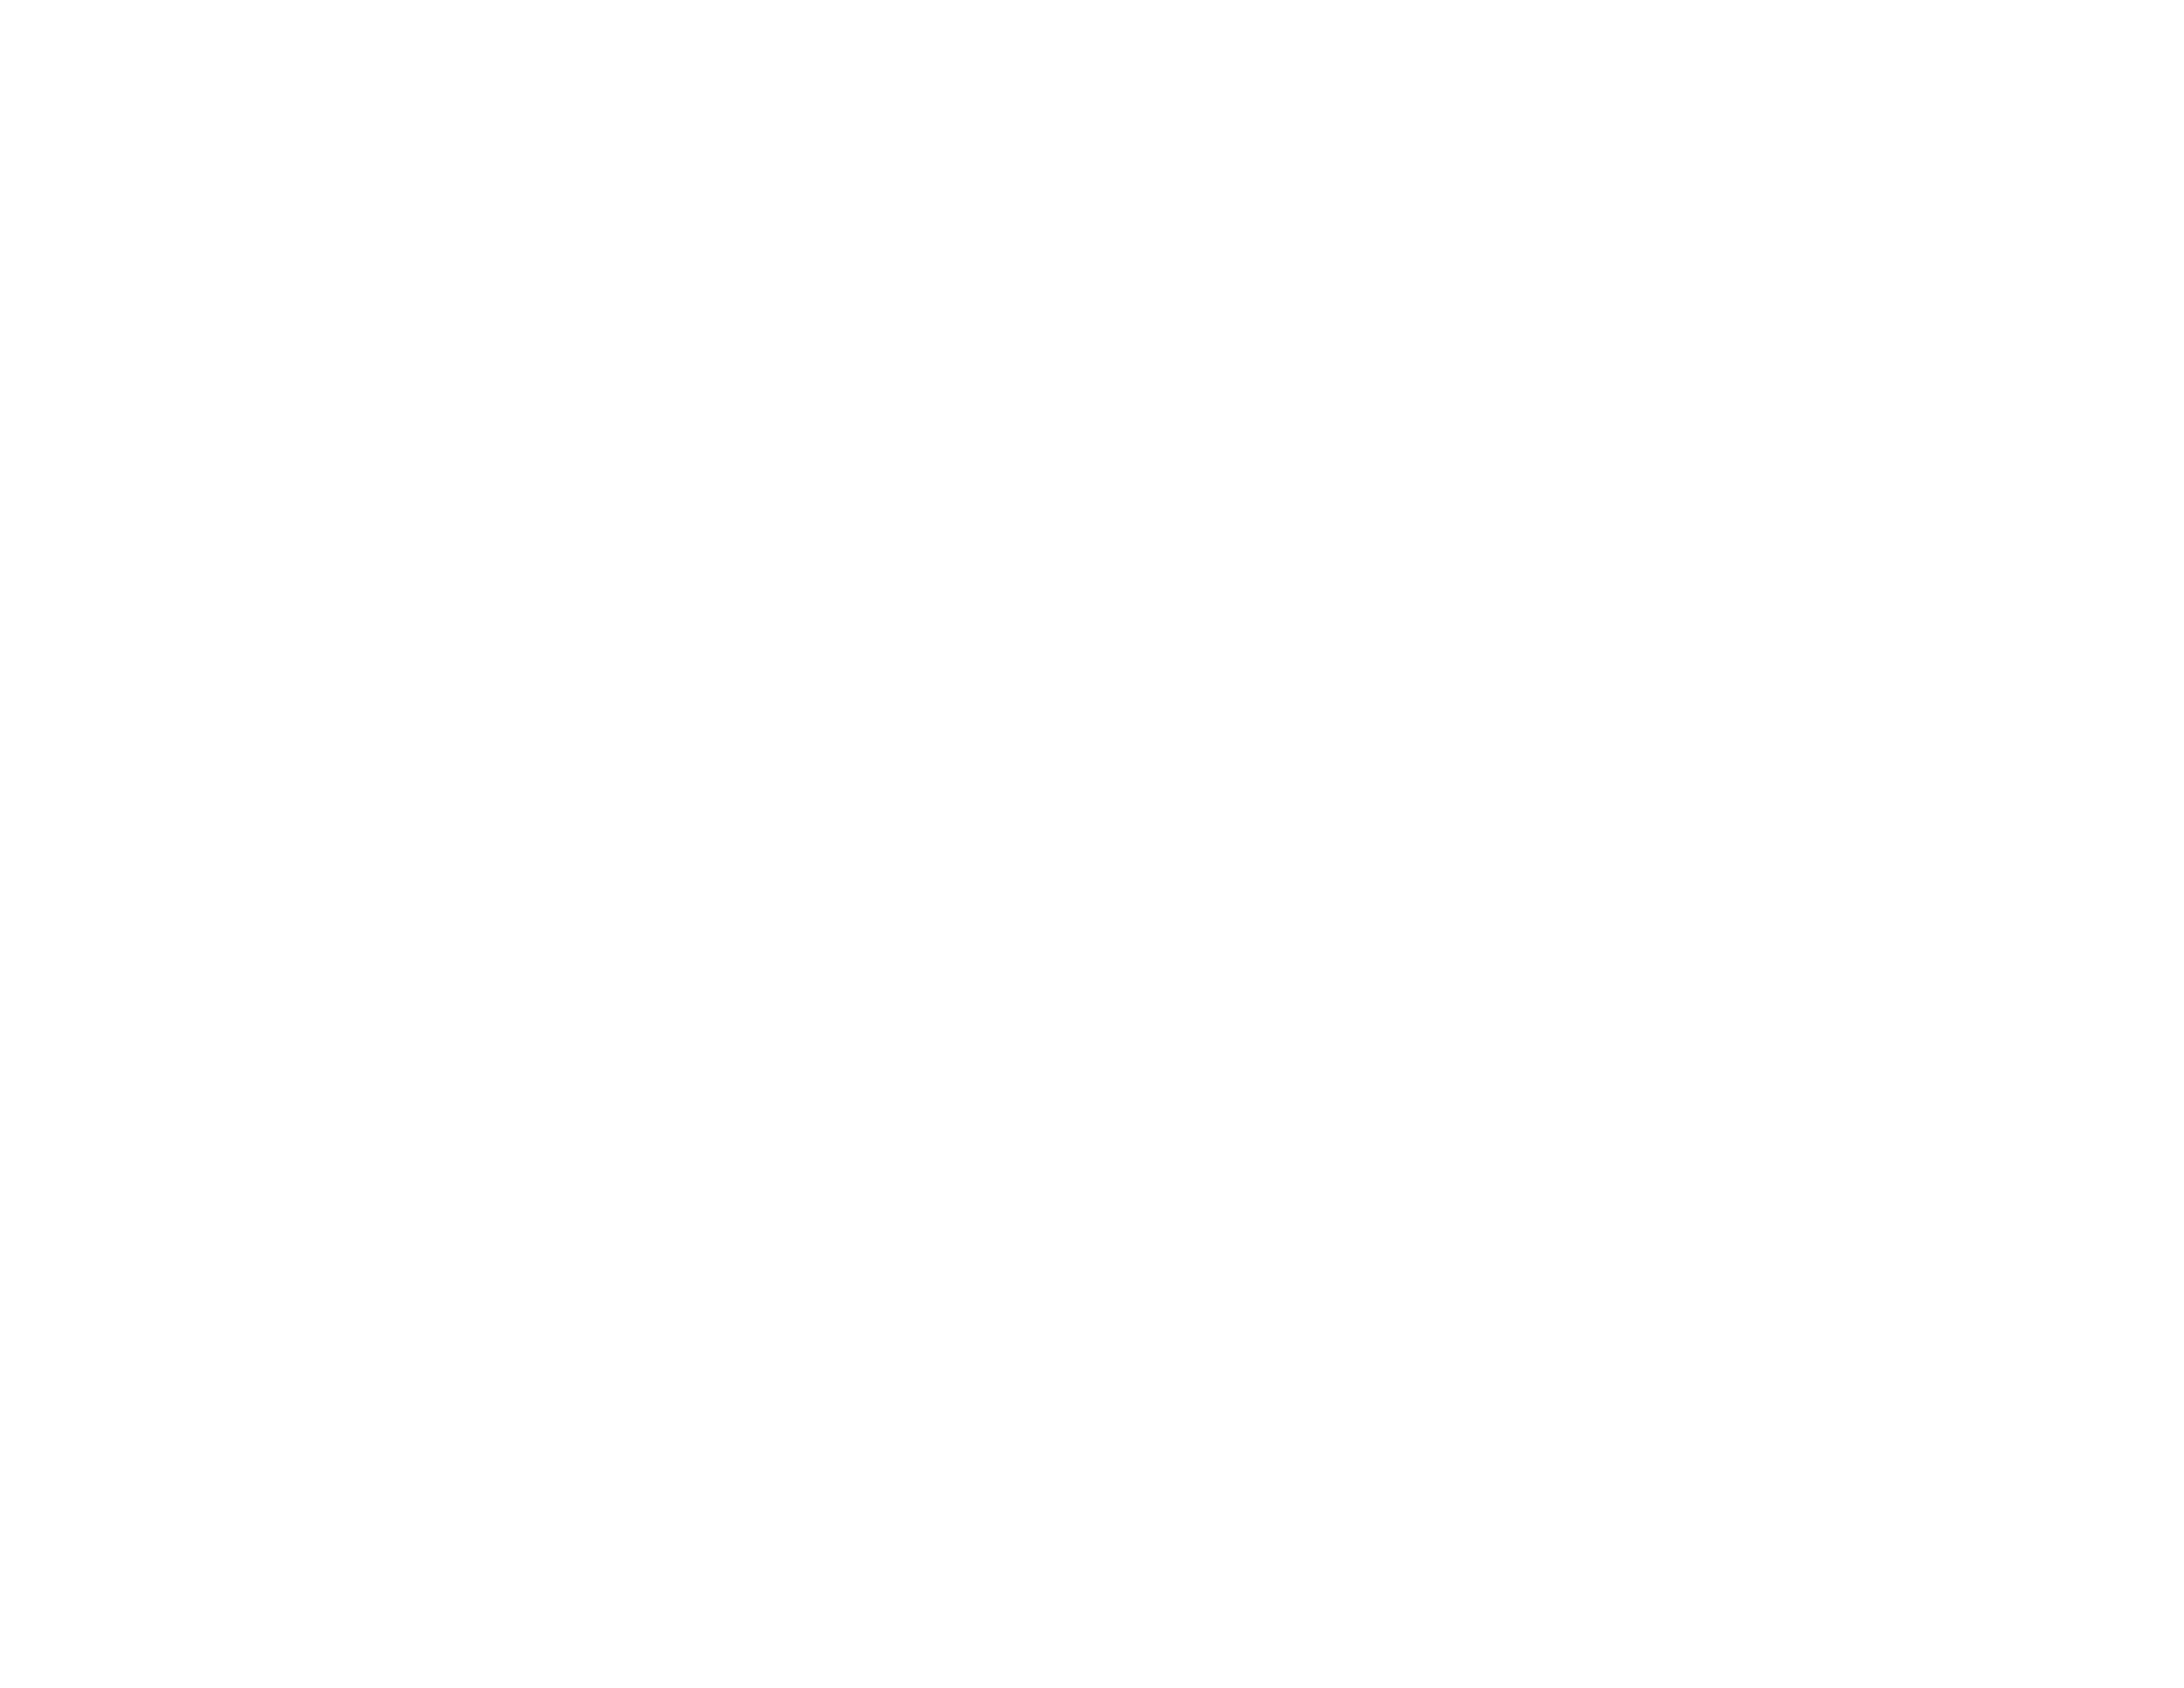 ARRAS RESIDENCES